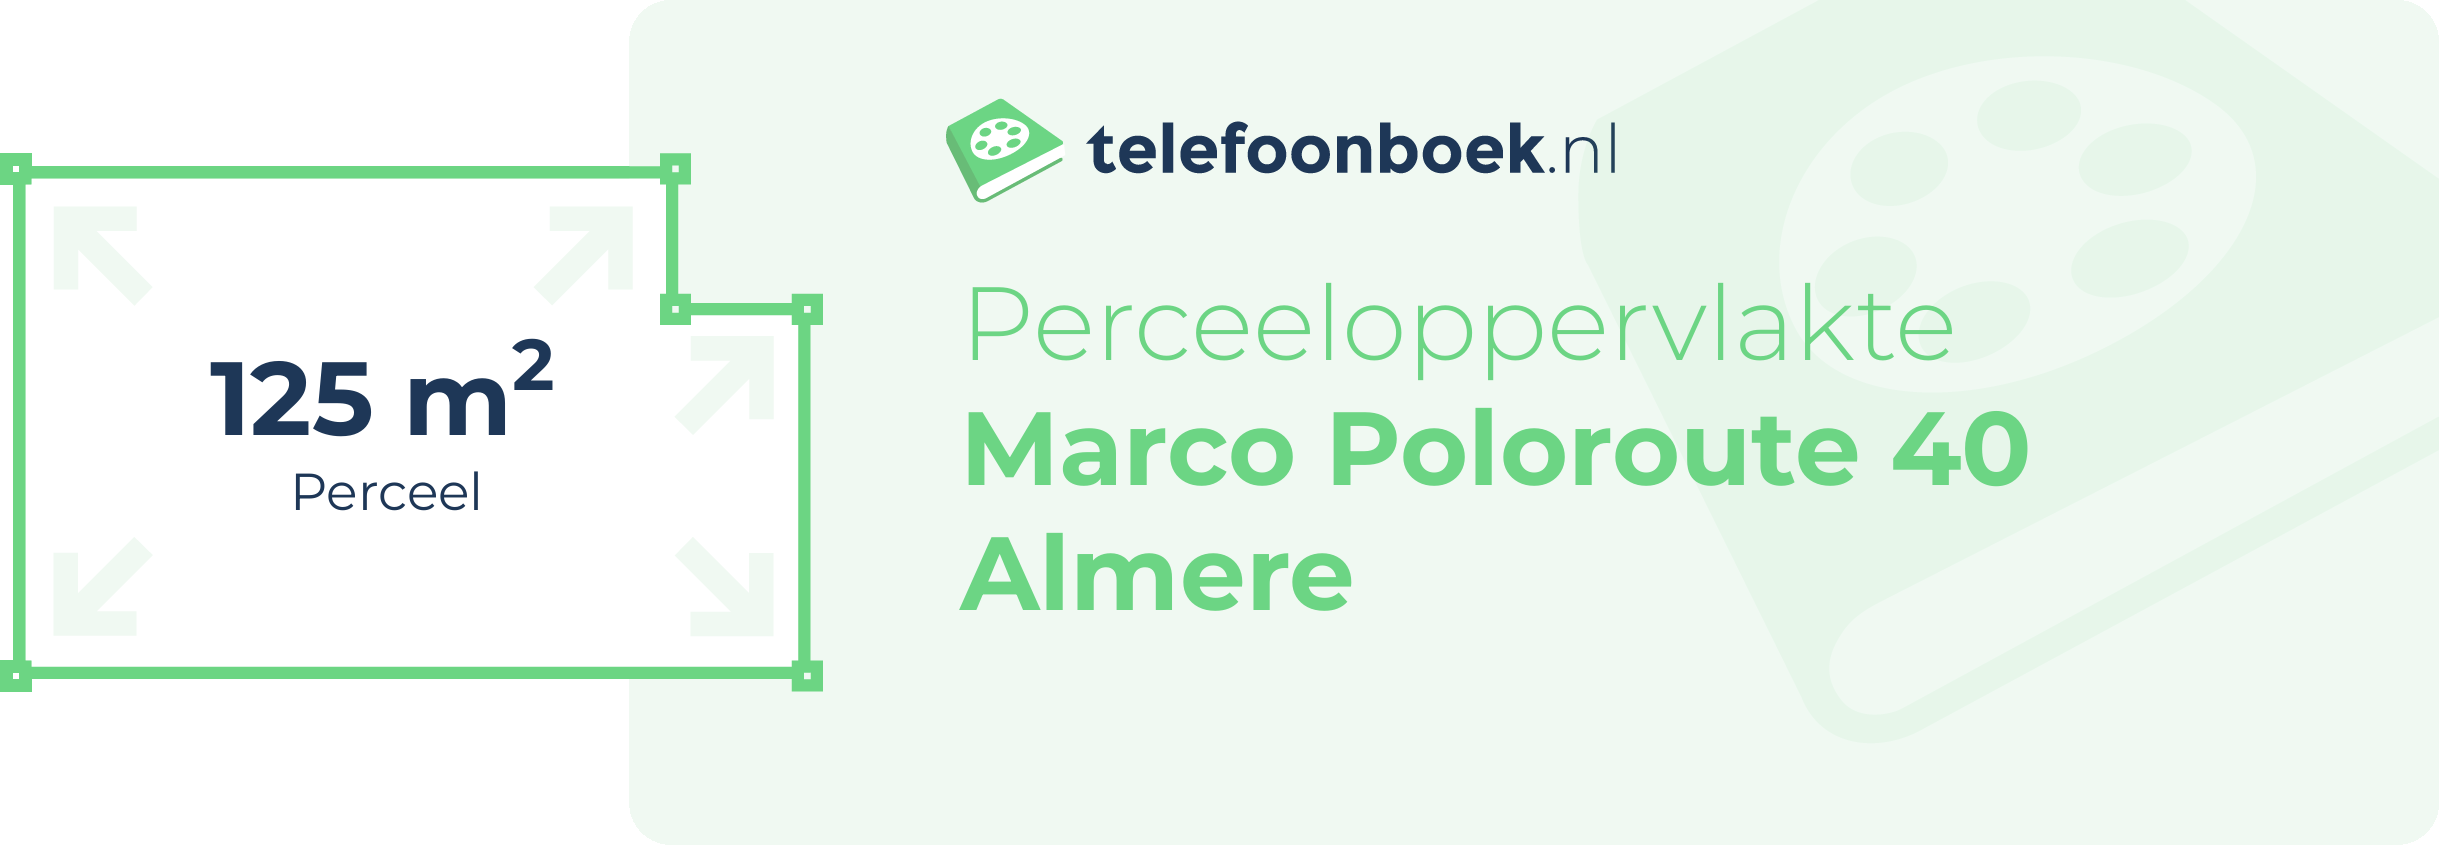 Perceeloppervlakte Marco Poloroute 40 Almere